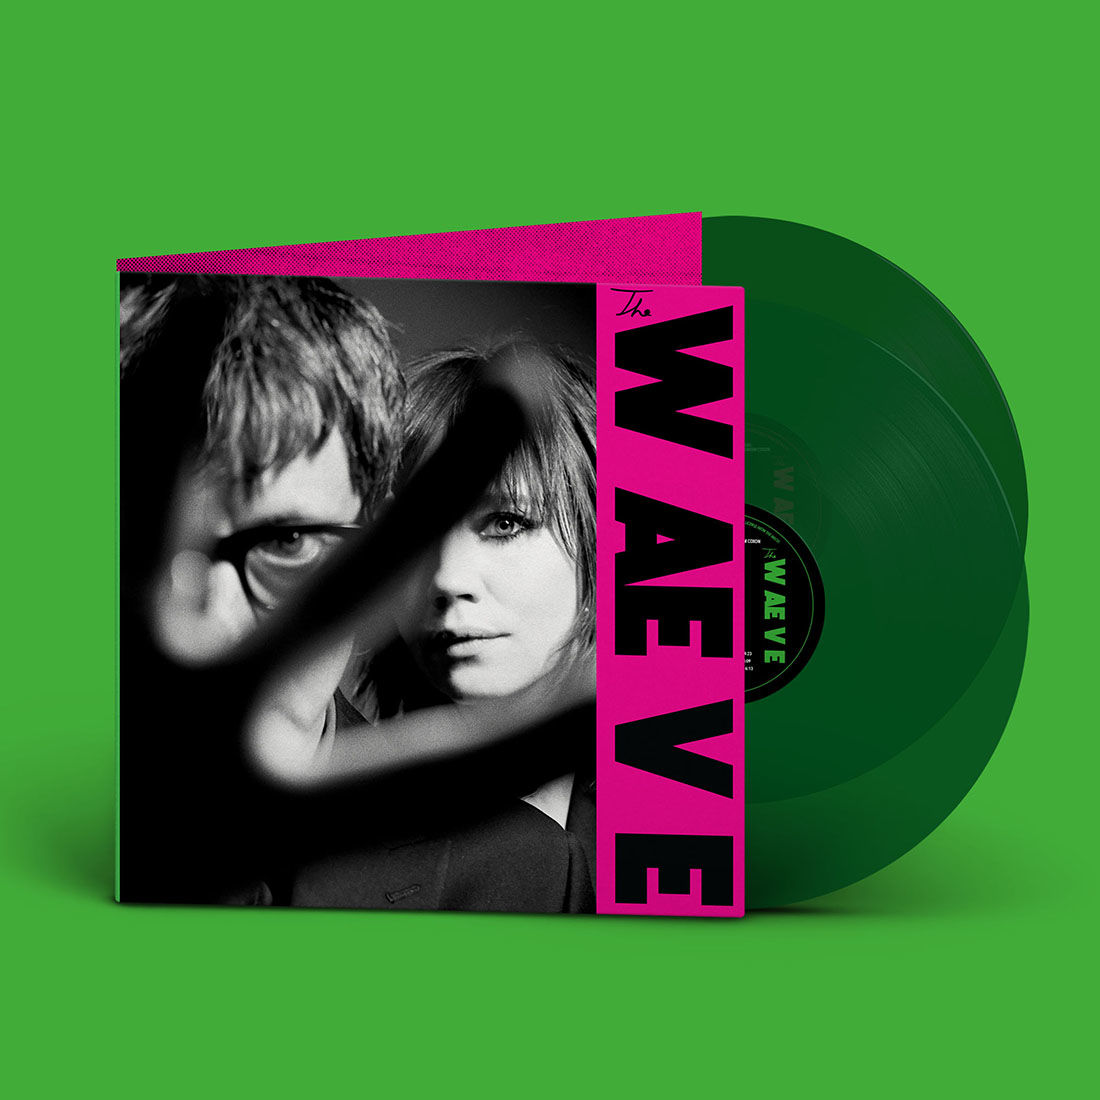 THE WAEVE (Graham Coxon and Rose Elinor Dougall) - The WAEVE: Limited Green Vinyl 2LP